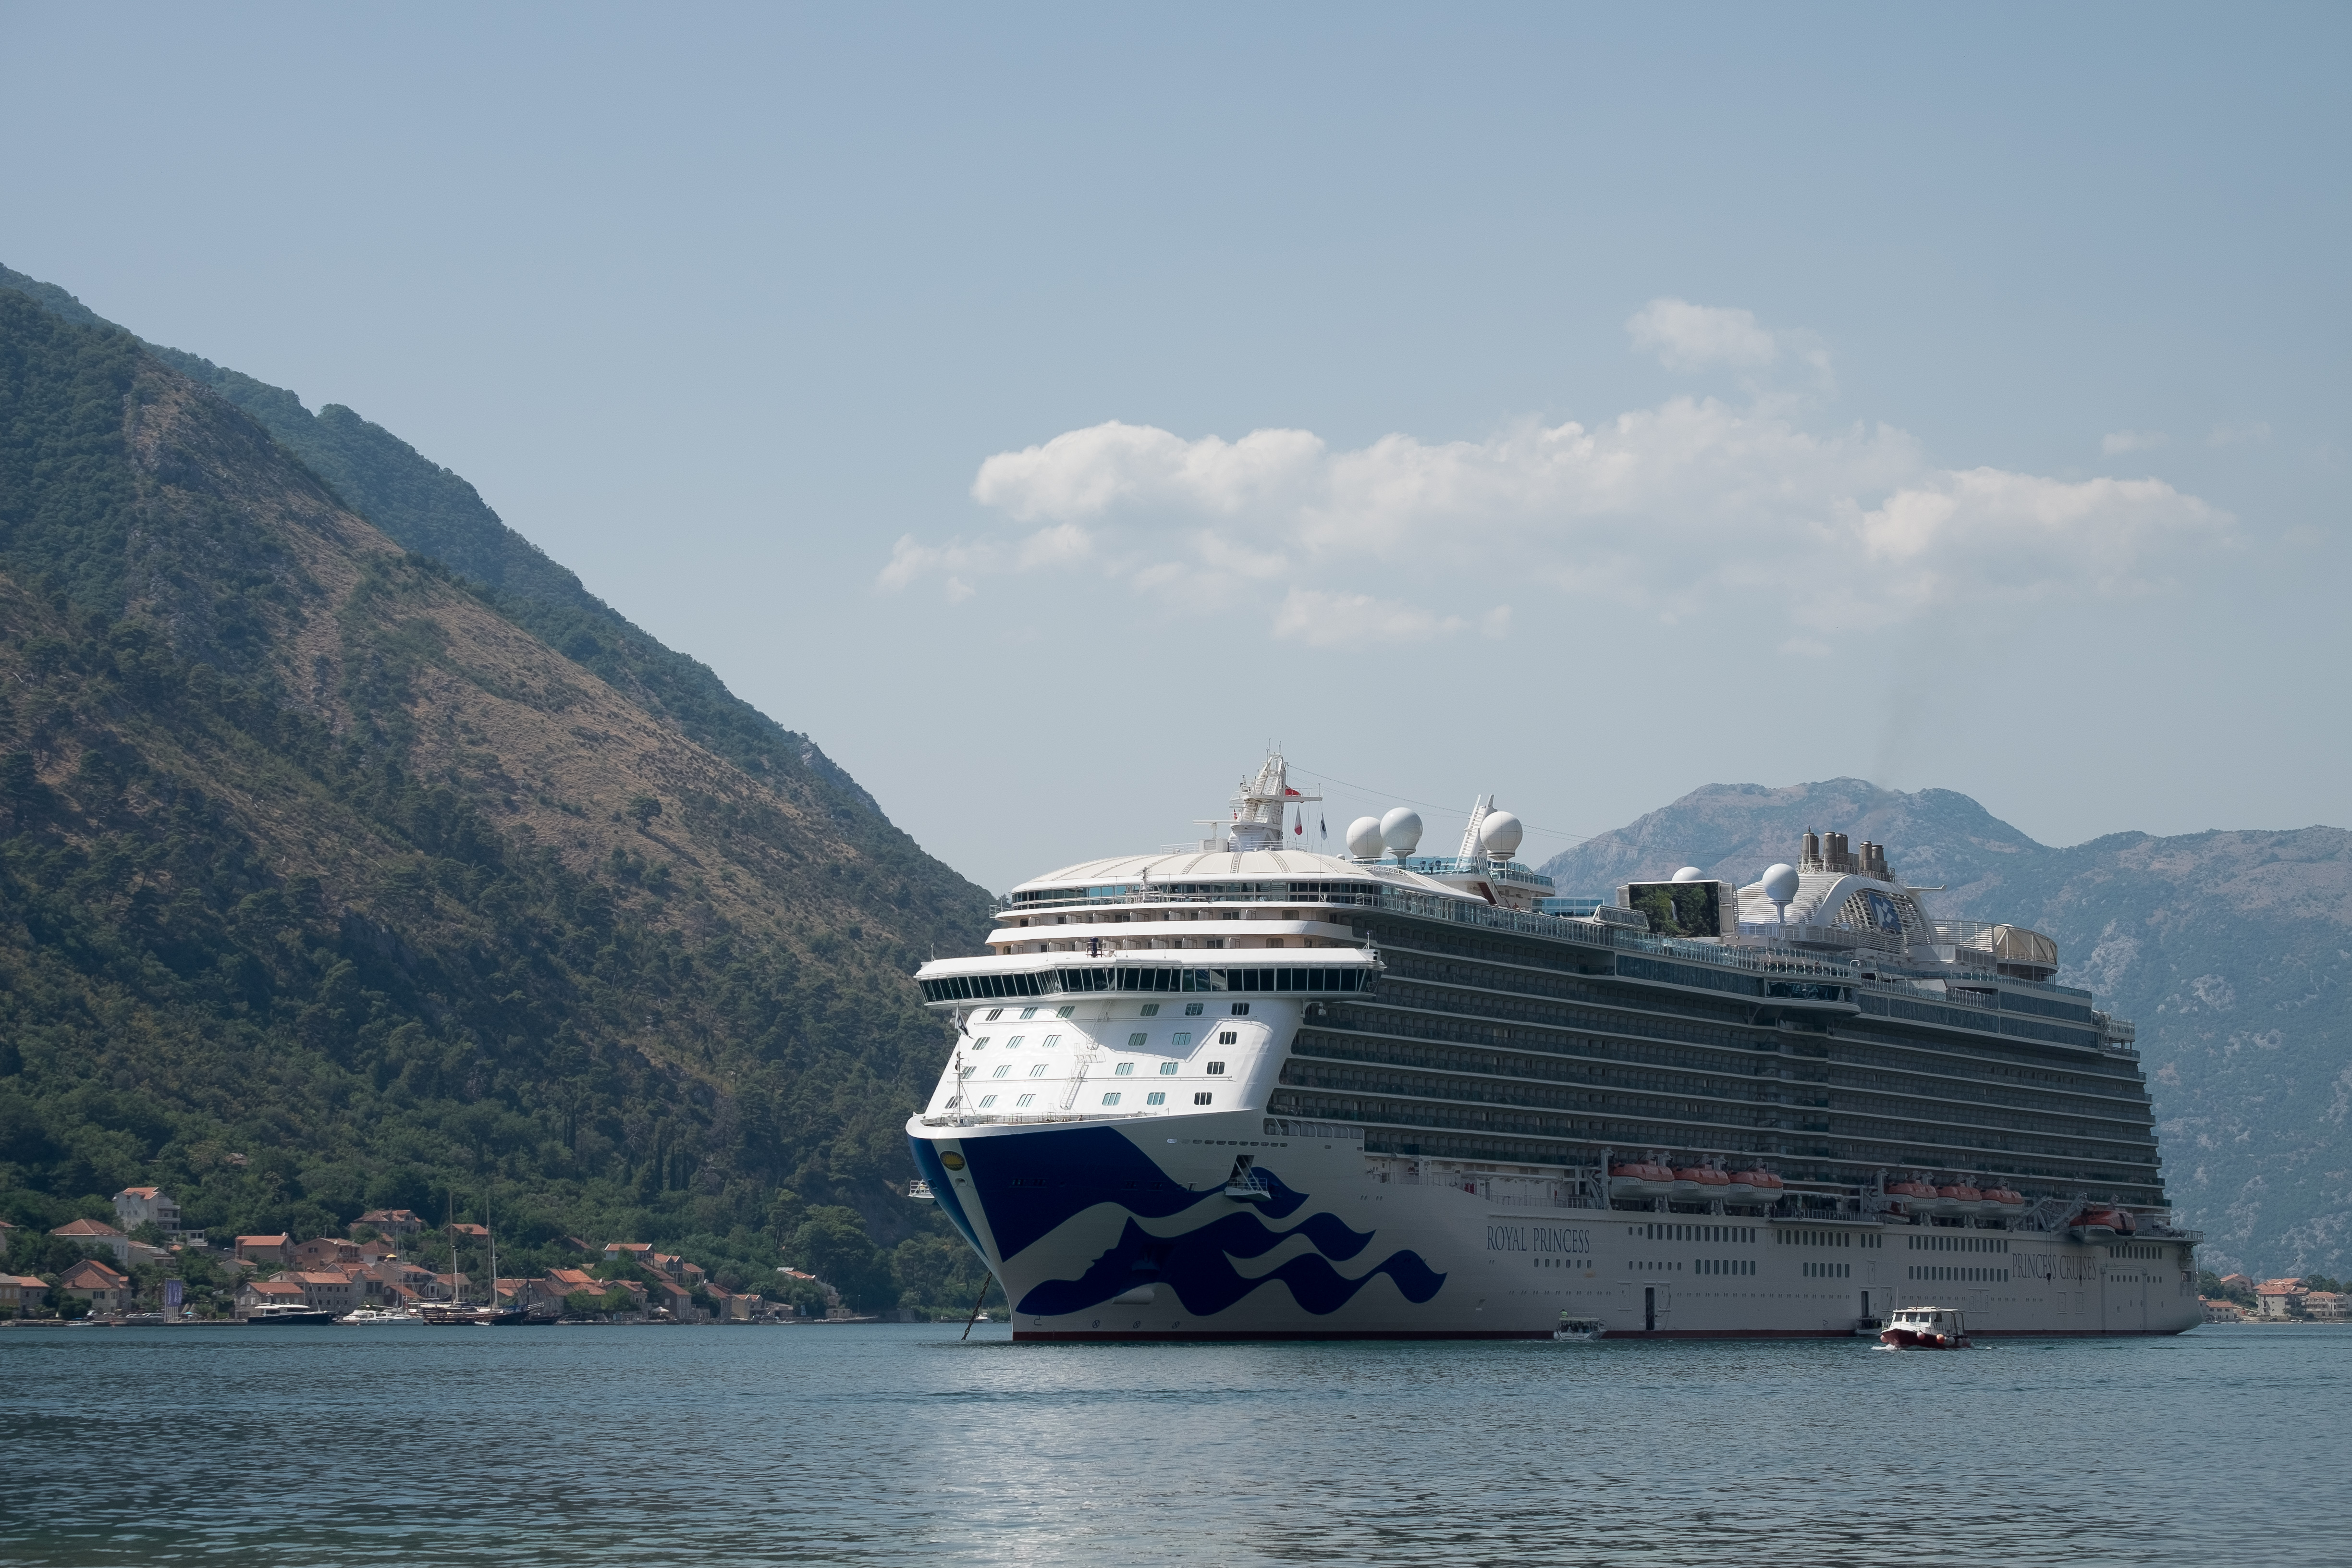 The Royal Princess, a cruise ship, moves into the Bay of Kotor, Montenegro